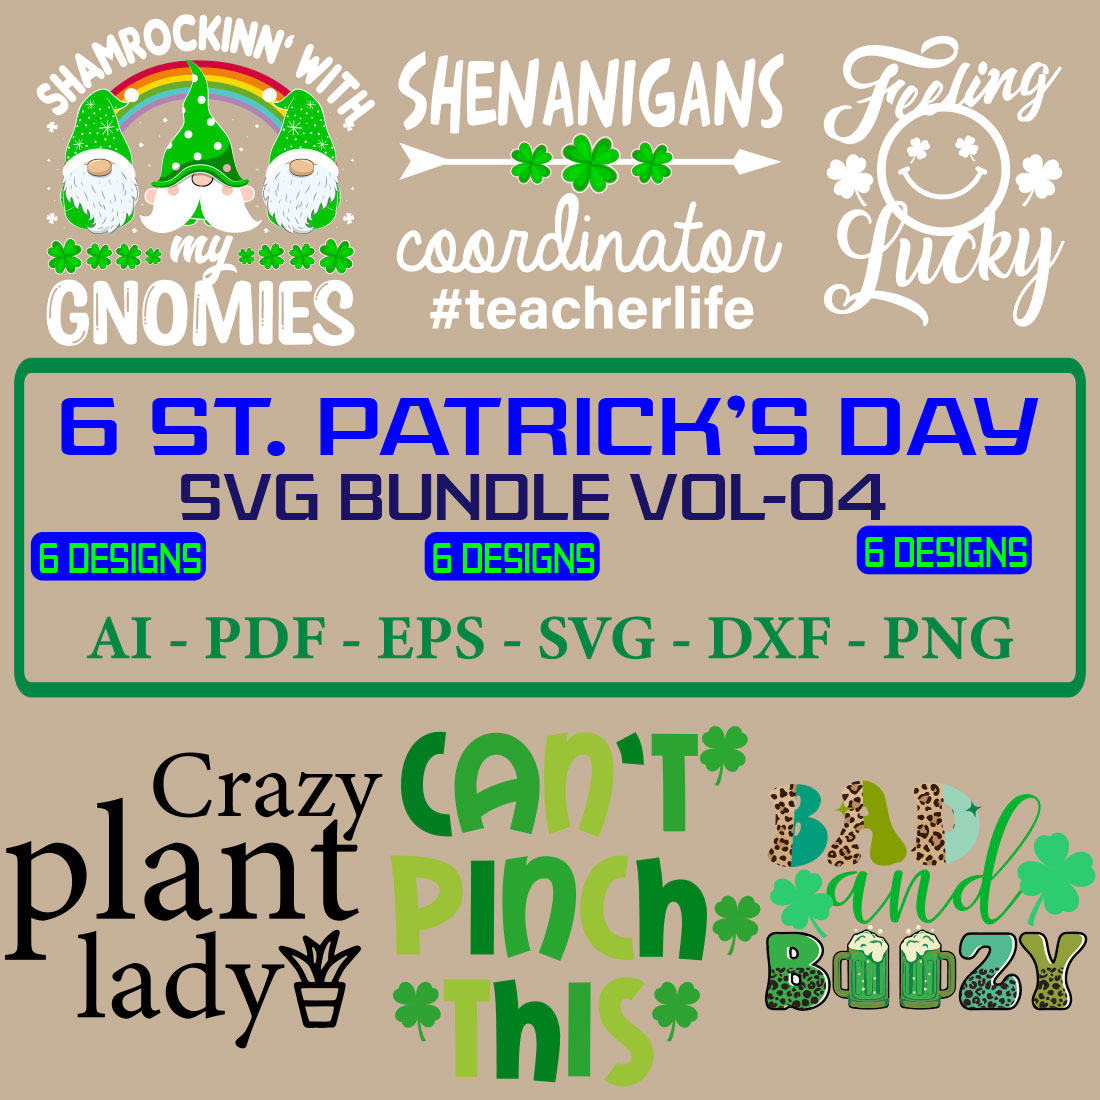 6 St Patrick’s Day SVG Bundle Vol 04 cover image.